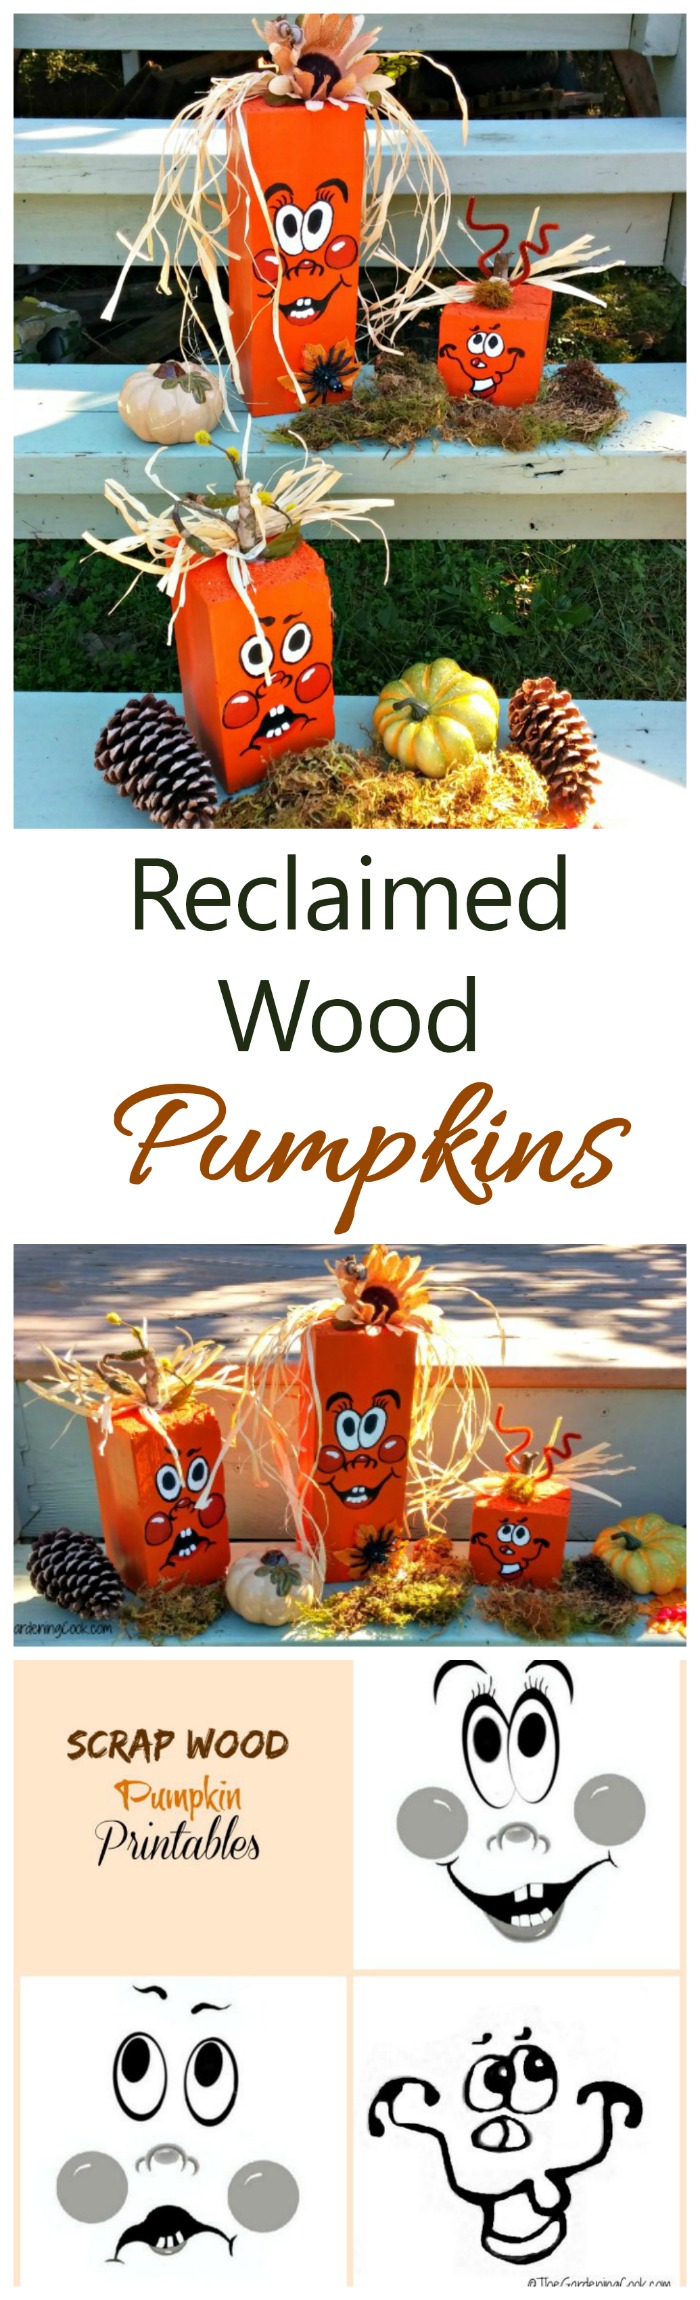 DIY Scrap Wood Pumpkins - បណ្តឹងឧទ្ធរណ៍ទប់ស្កាត់ការដួលរលំដ៏គួរឱ្យស្រឡាញ់